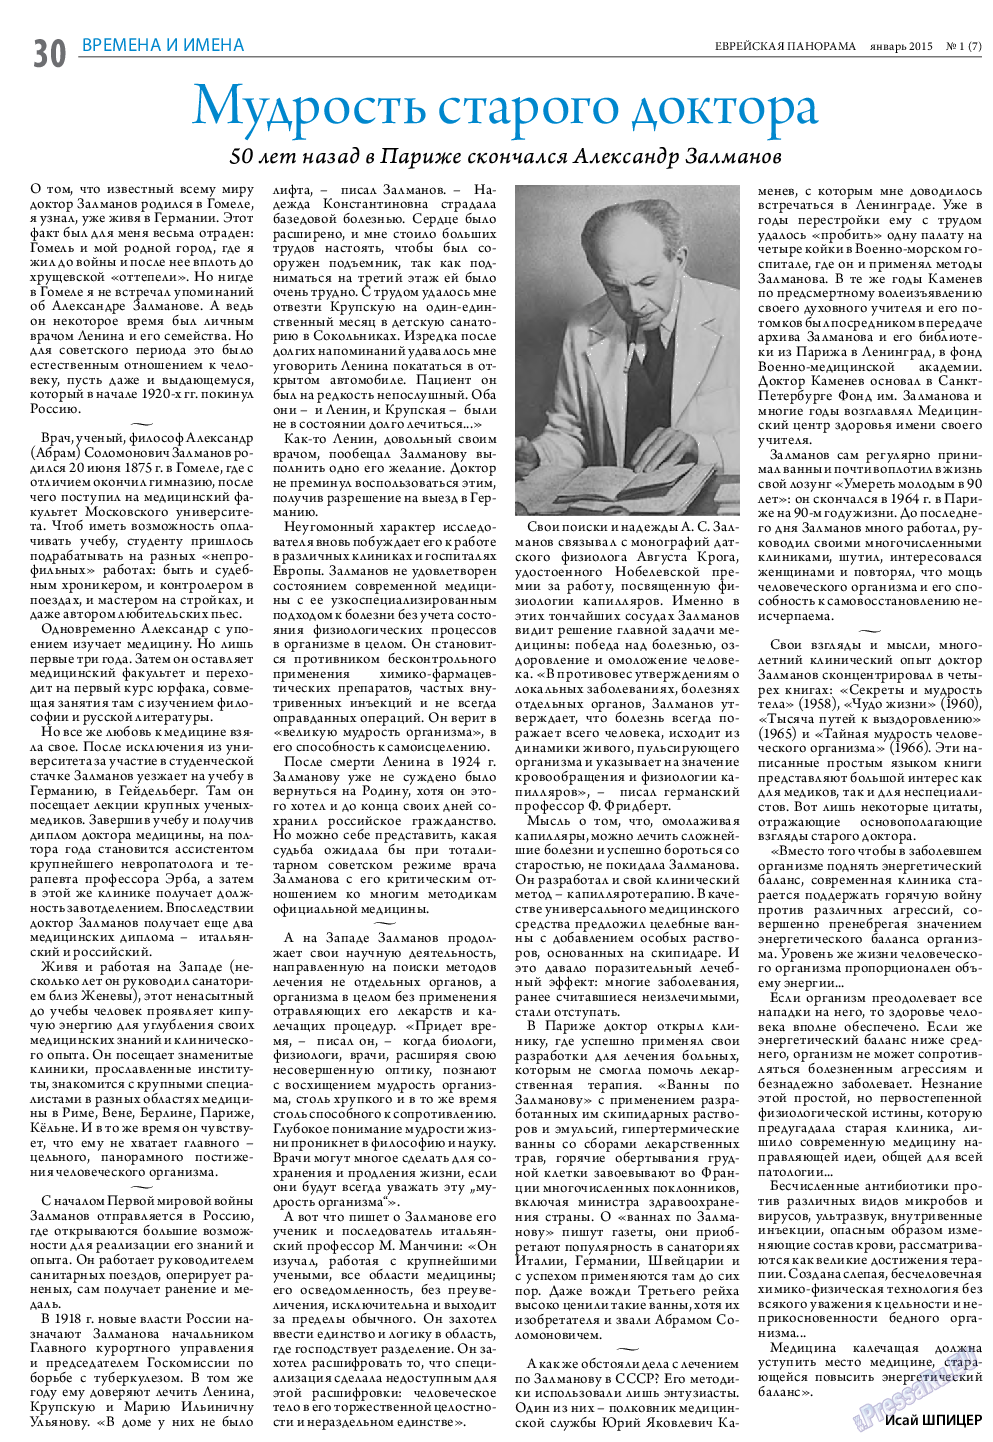 Еврейская панорама, газета. 2015 №1 стр.30